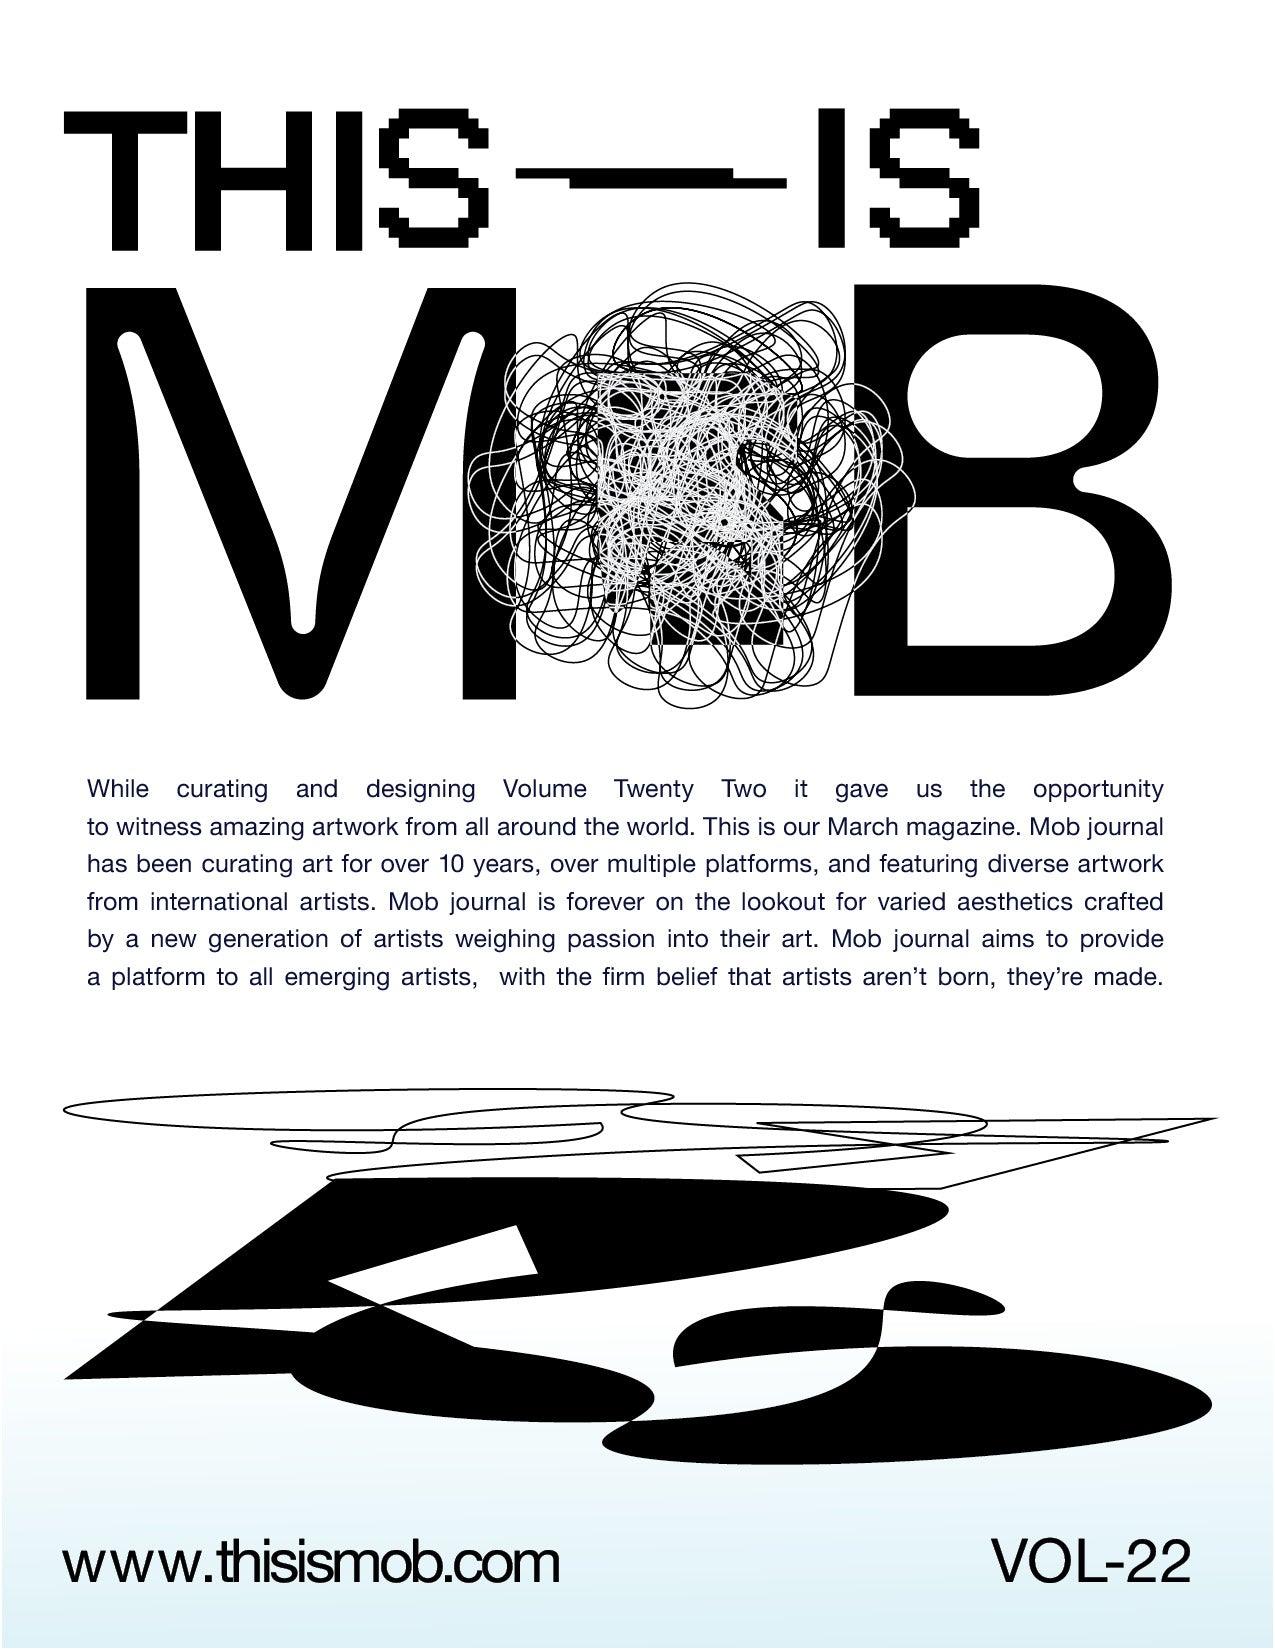 MOB JOURNAL | VOLUME TWENTY TWO | ISSUE #10 - Mob Journal